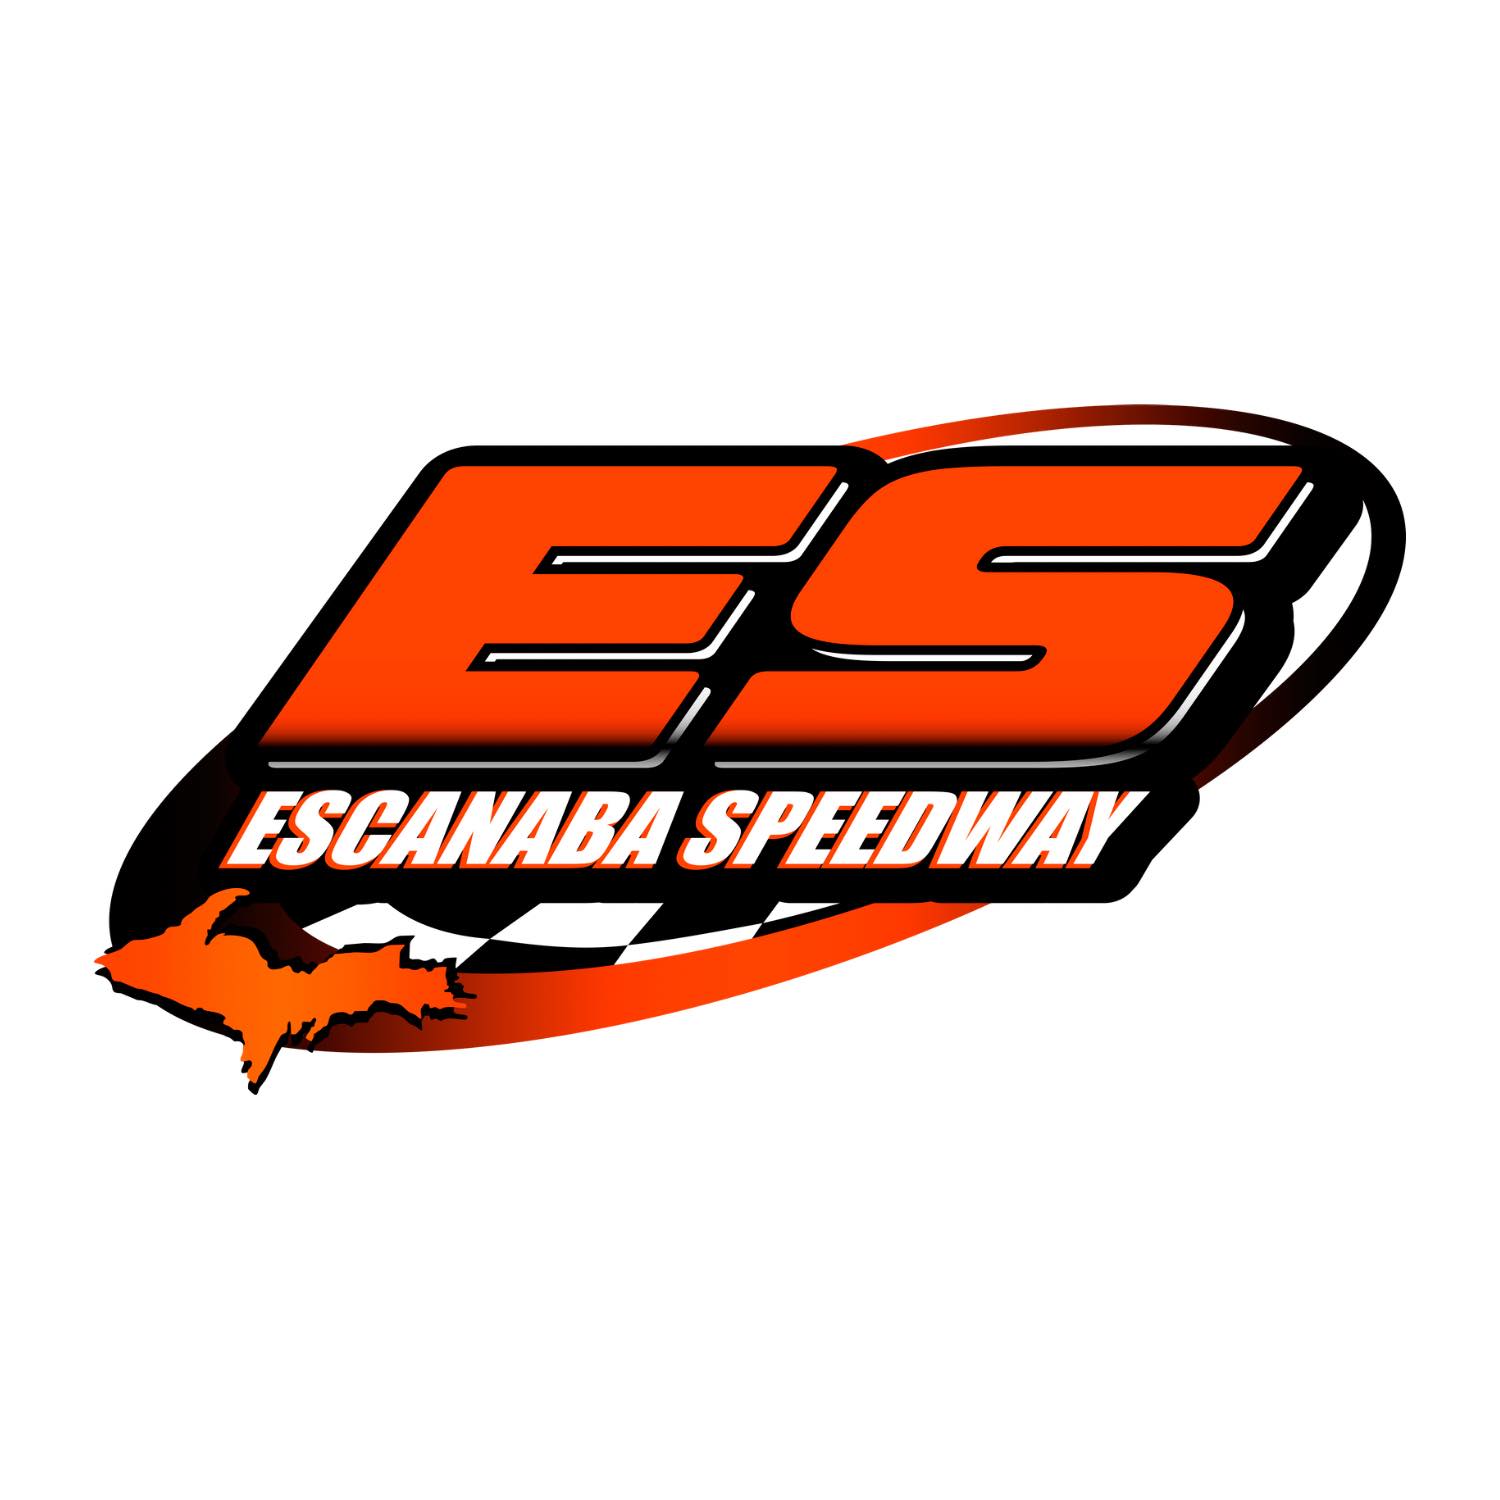 Escanaba Speedway Racing